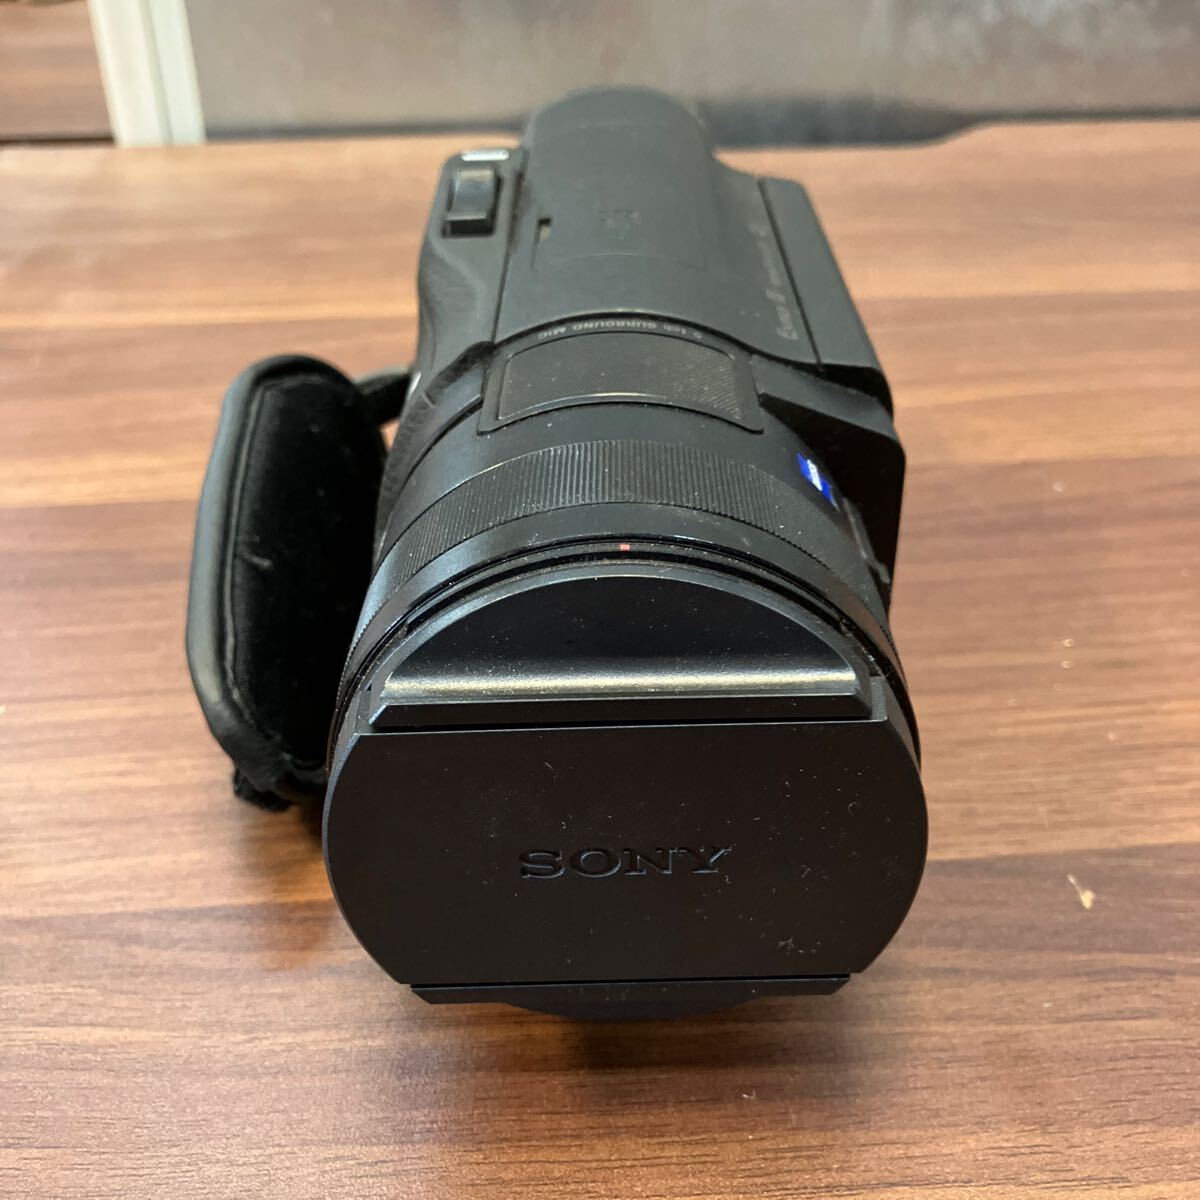 SONY Handycam HDR-CX900 цифровая видео камера др. 14 год производства Sony Handycam цифровая камера камера бытовая техника цифровой фотография камера man фотосъемка 